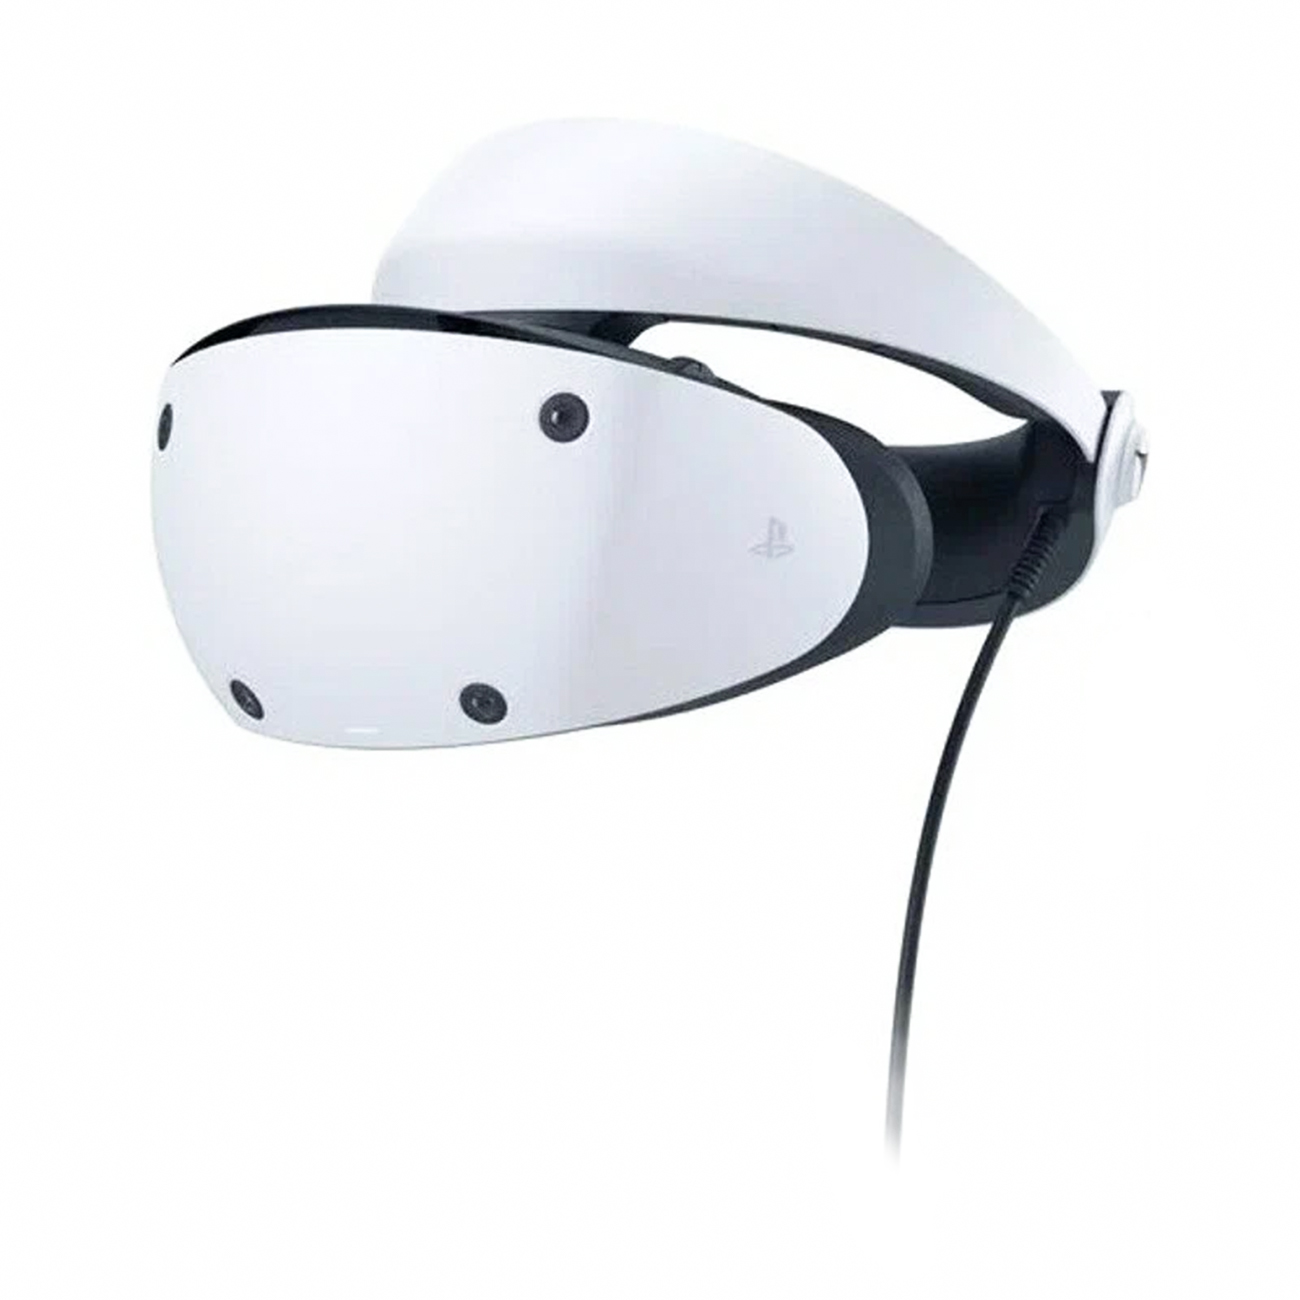 Шлем виртуальной реальности Sony PlayStation VR2 + Игра Horizon Call Of The Mountain